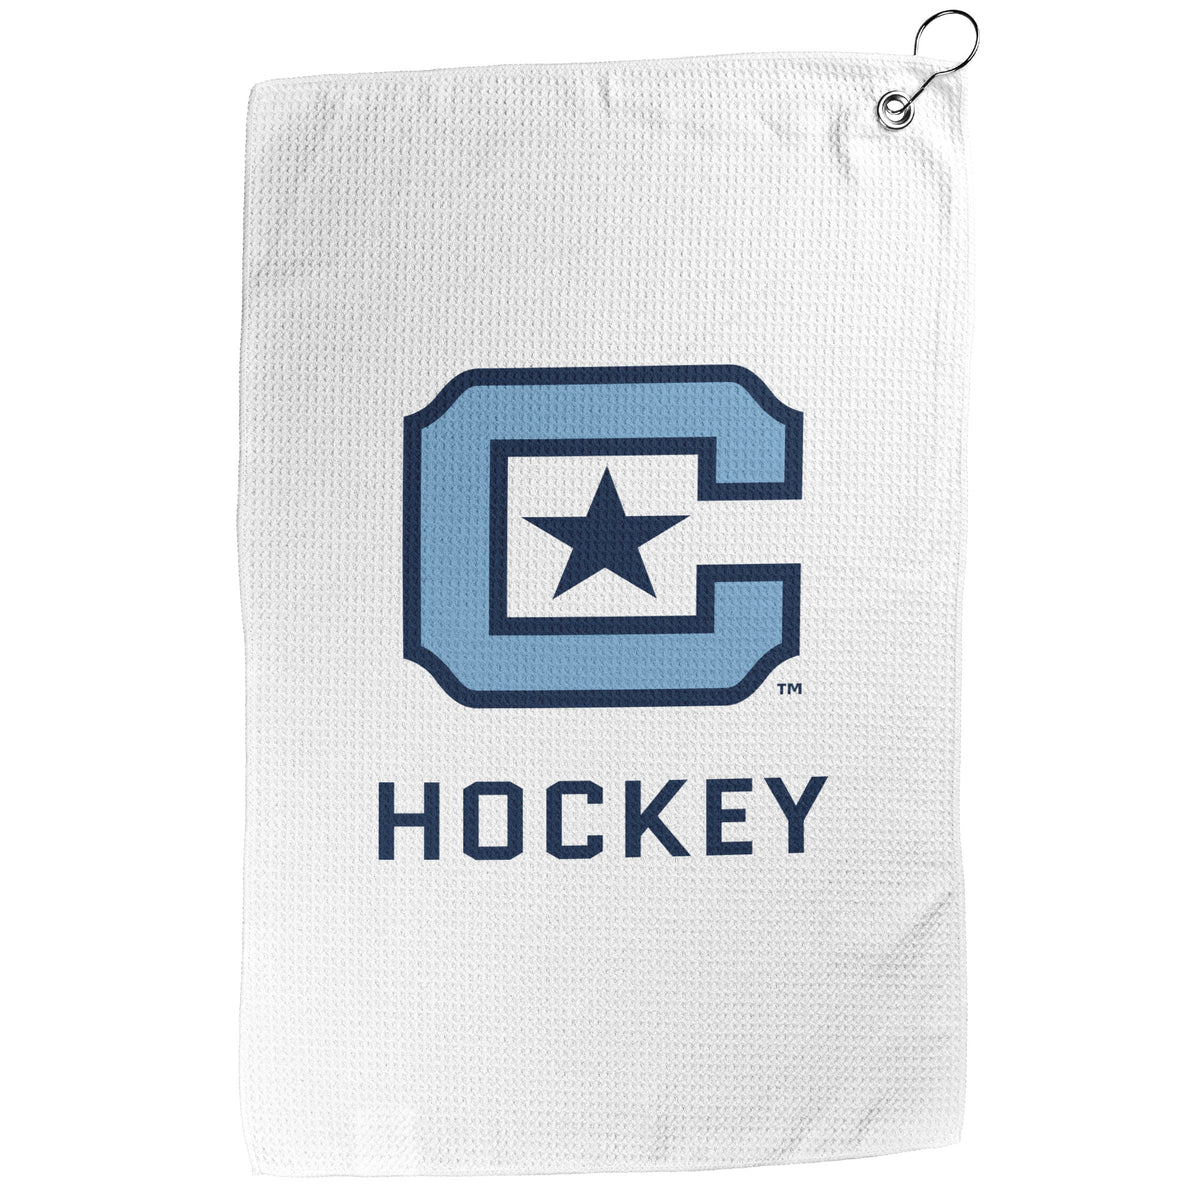 The Citadel, Club Sports Hockey, Double Sided Golf Towel